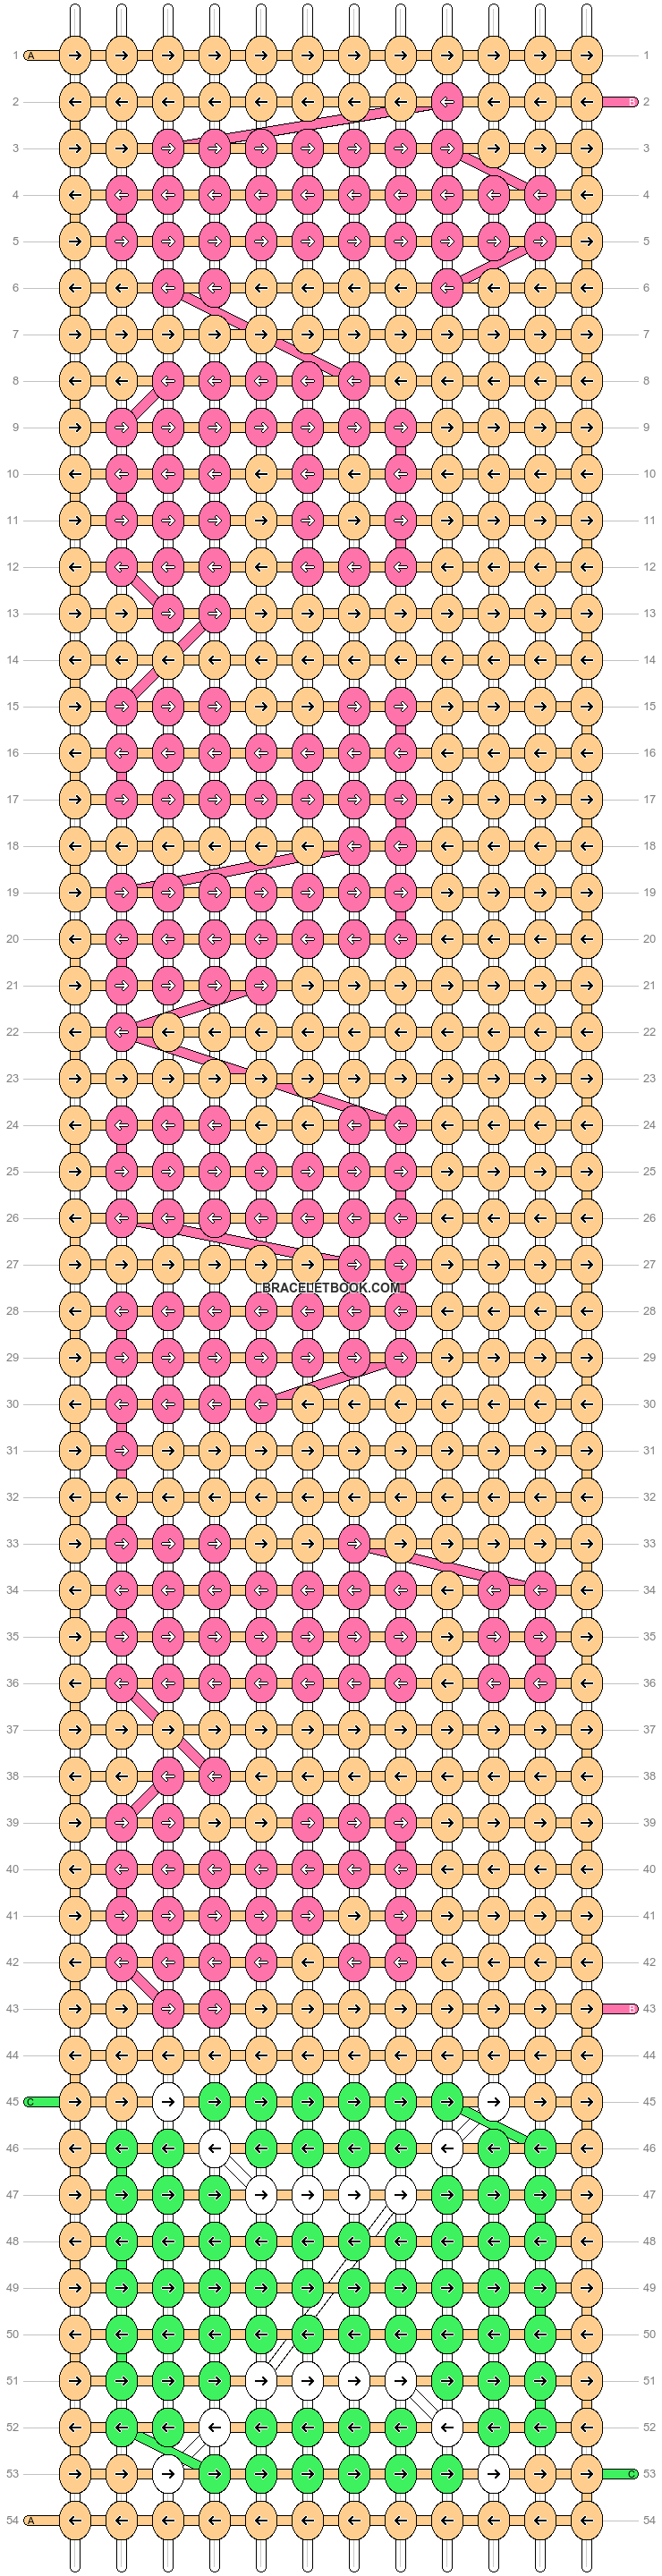 Alpha pattern #60340 variation #110559 pattern